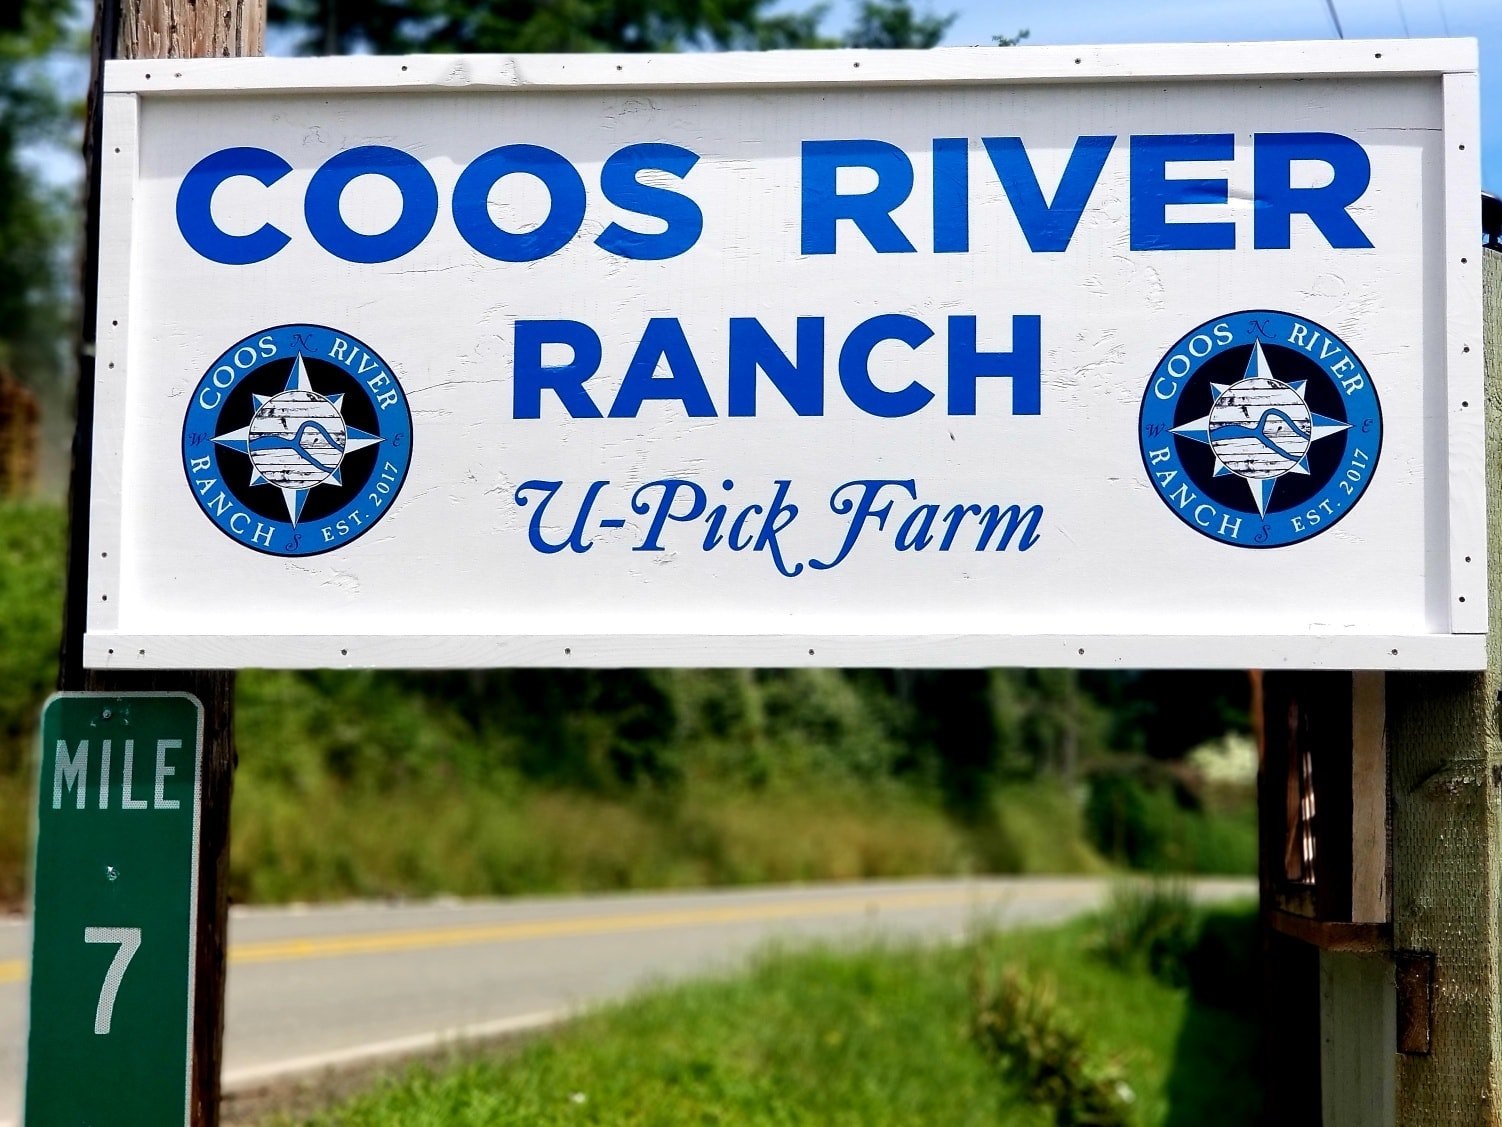 coos river ranch_logo_sign.jpg